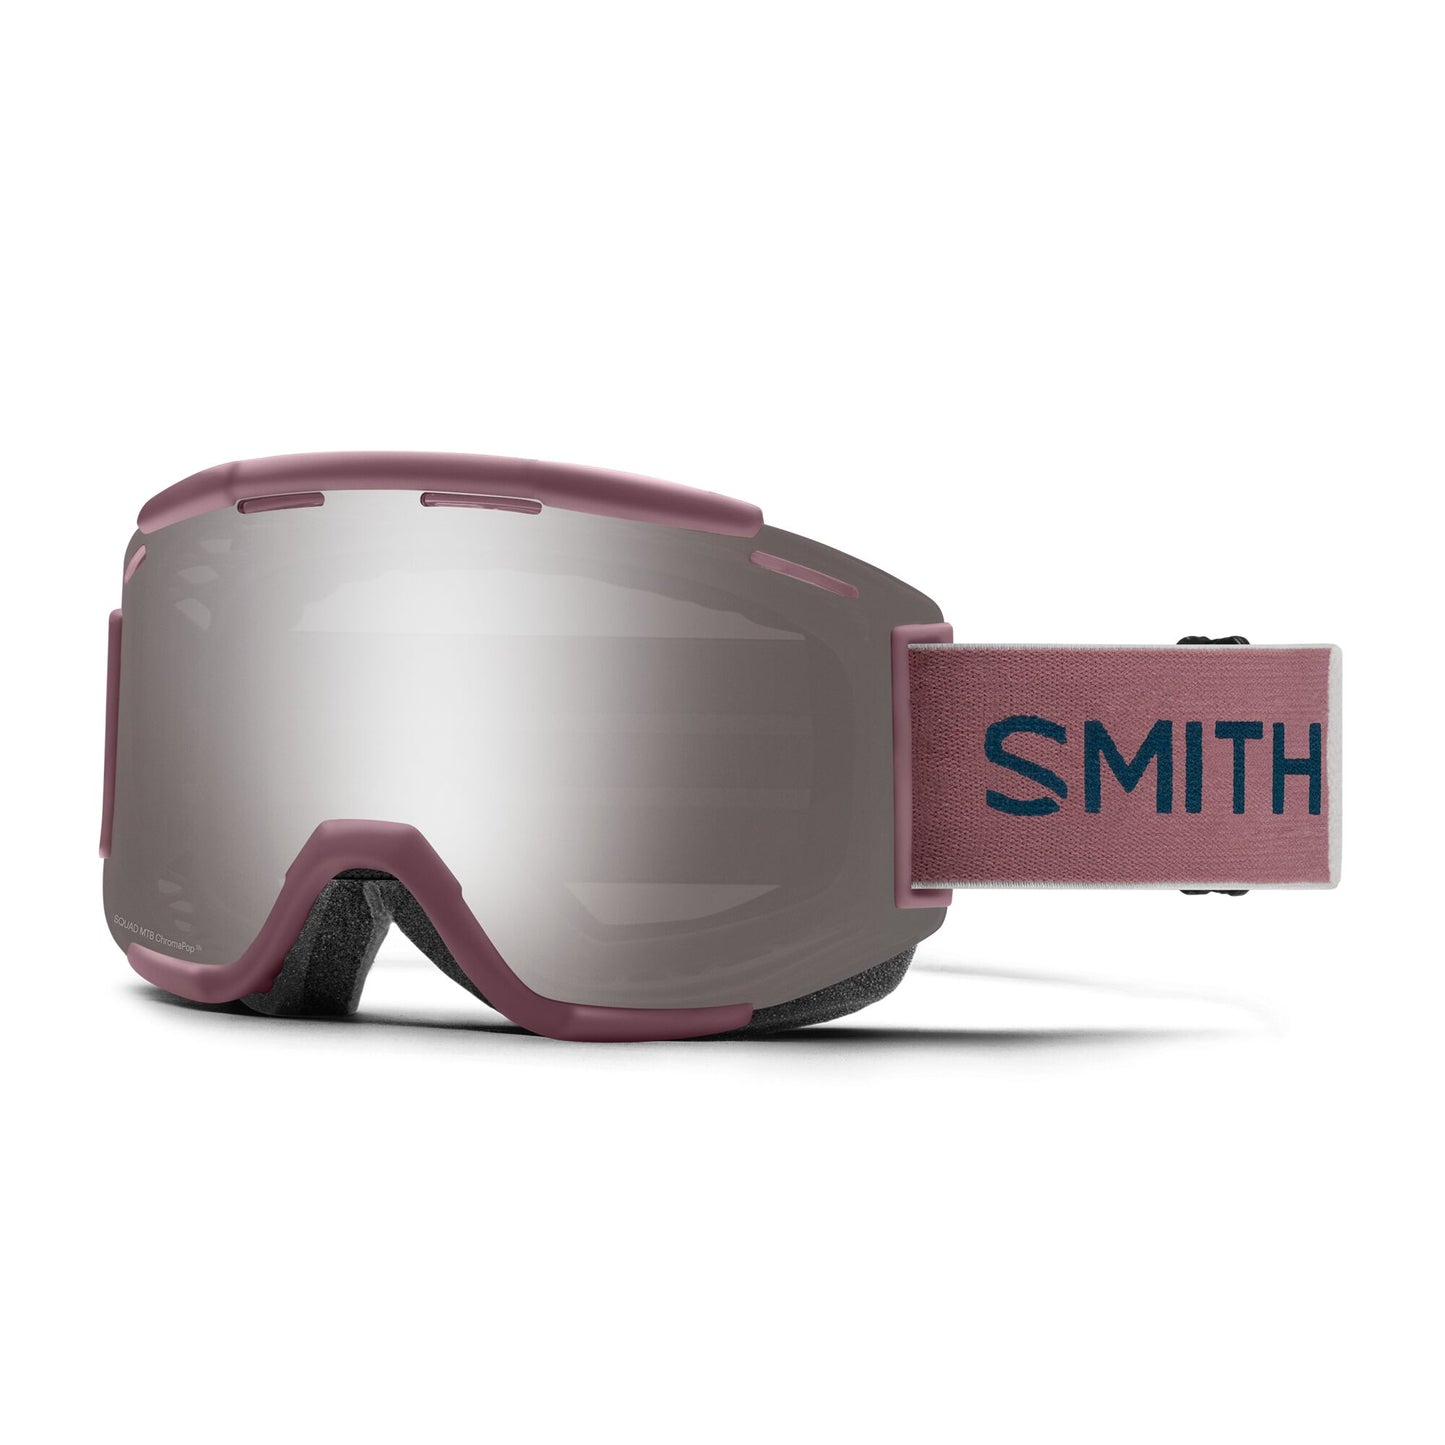 Smith Squad MTB Goggles - One Size Fits Most - Dusk - Bone - ChromaPop Sun Platinum Lens